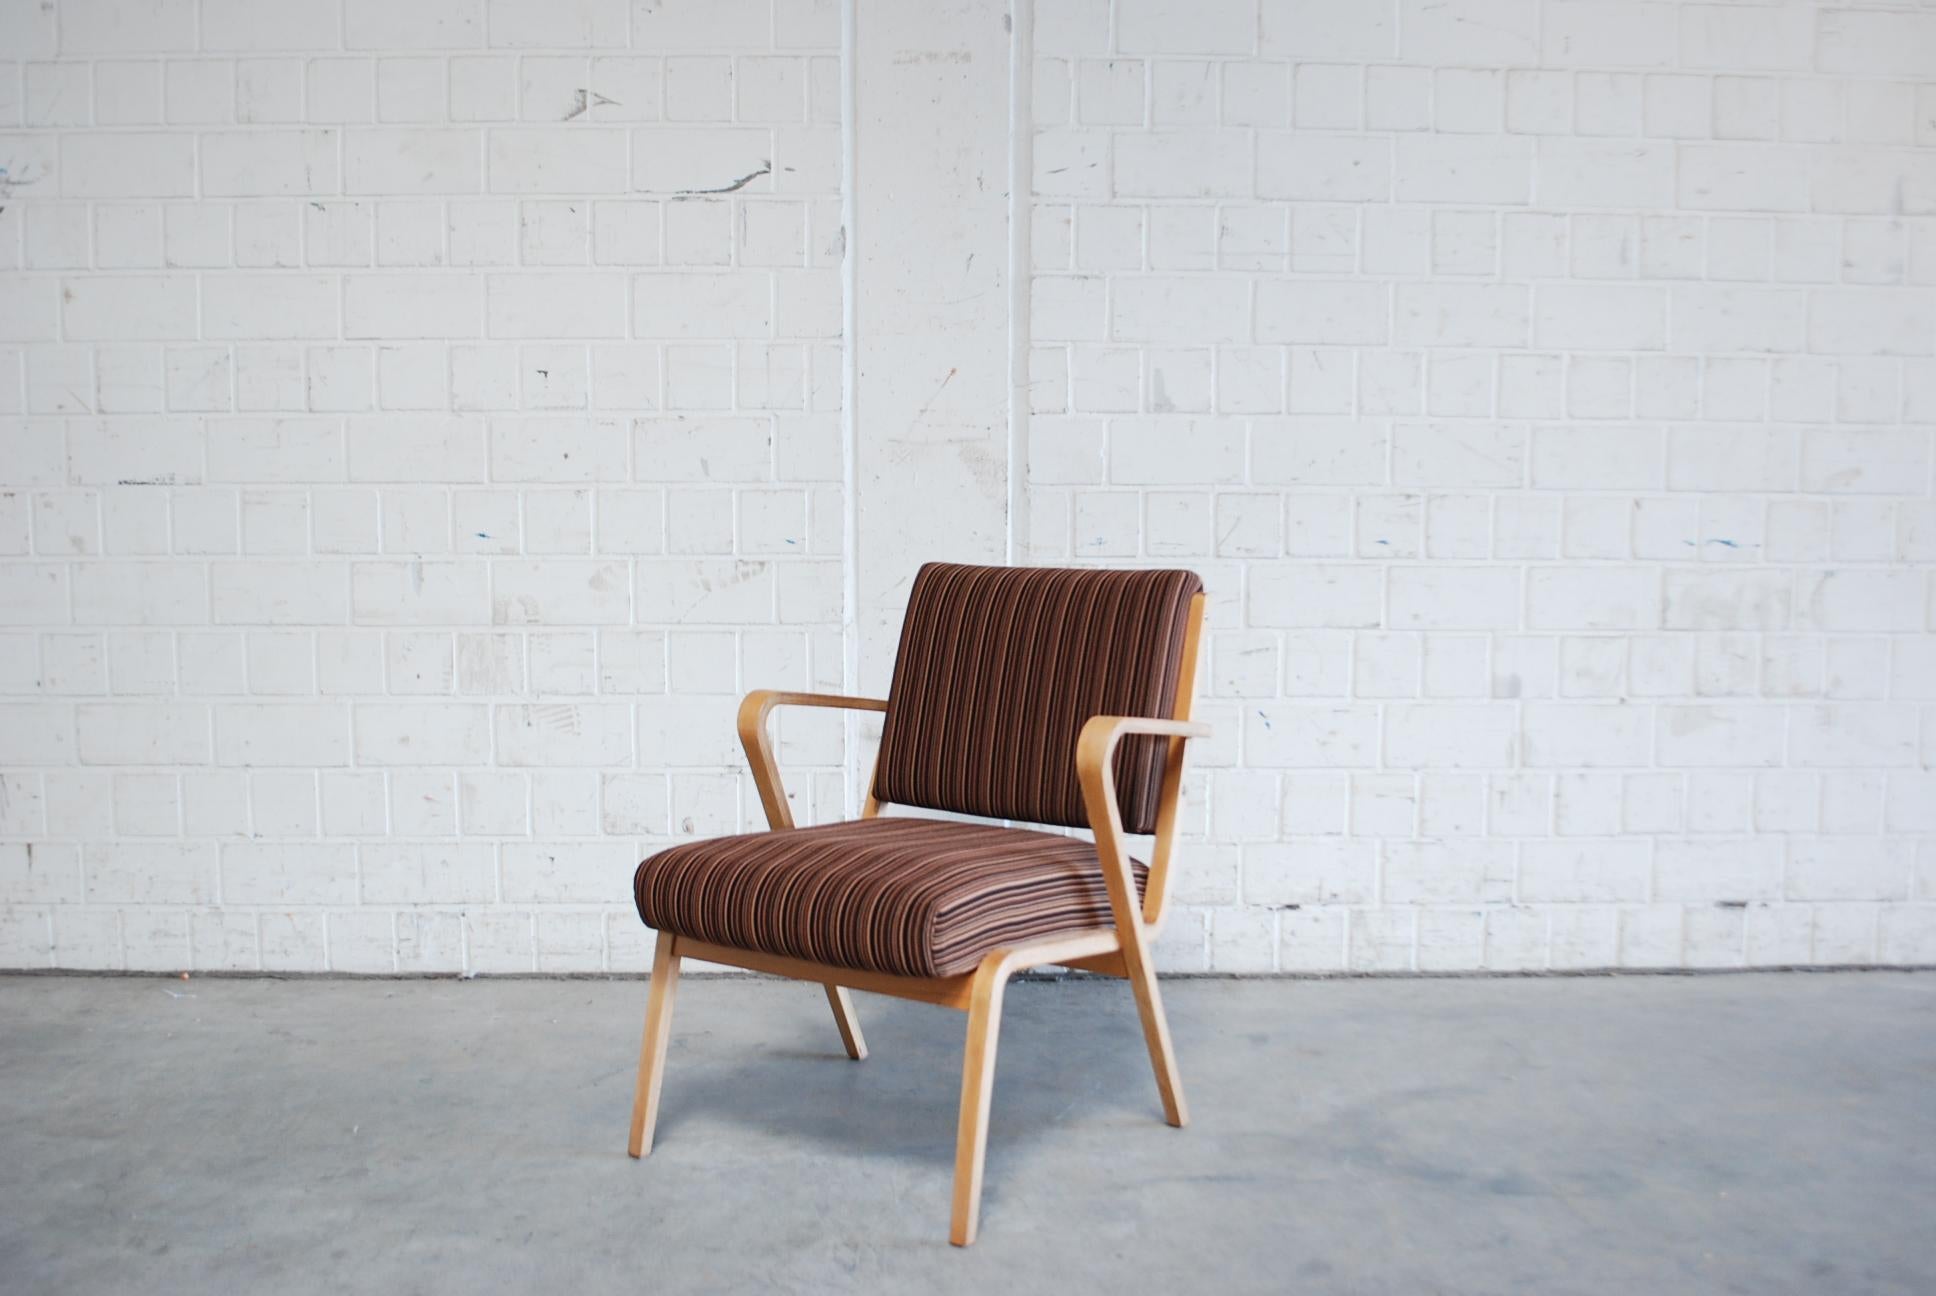 These Bauhaus easy chairs, modell 53693 with striped upholstery, were designed by Selman Selmanagic for VEB Deutsche Werkstätten Hellerau.
German midcentury DDR Bauhaus Ära designed in 1957.
From 1945 until 1968 Selmanagic was the main architect